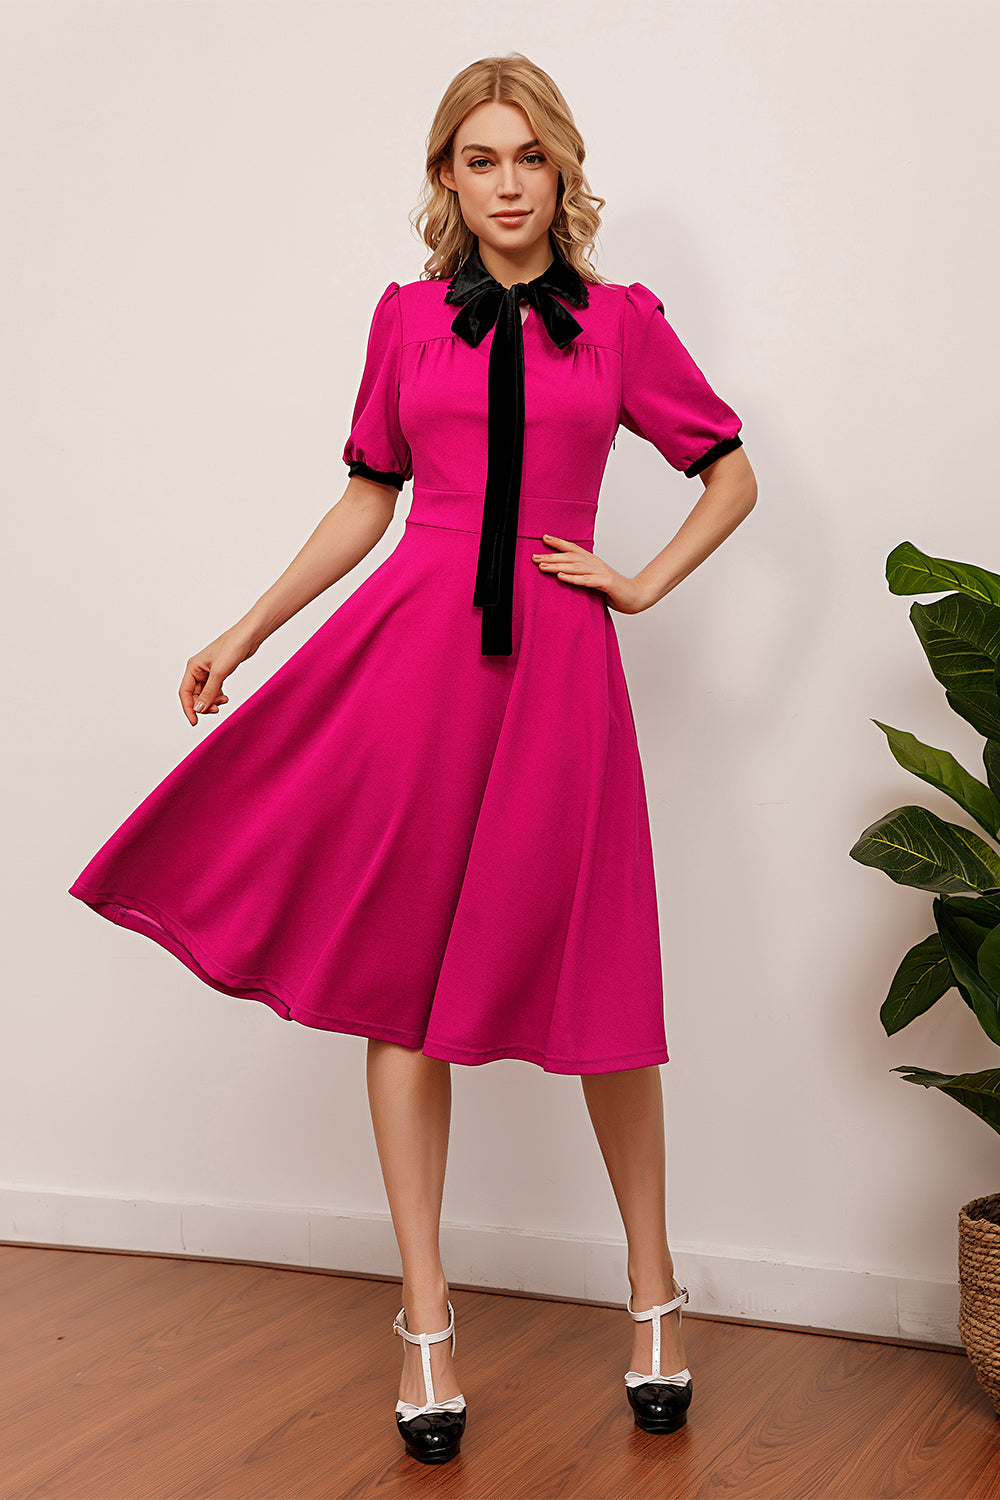 Pejock Cyber Fashion Monday Deals Christmas Dress for Women 1950S